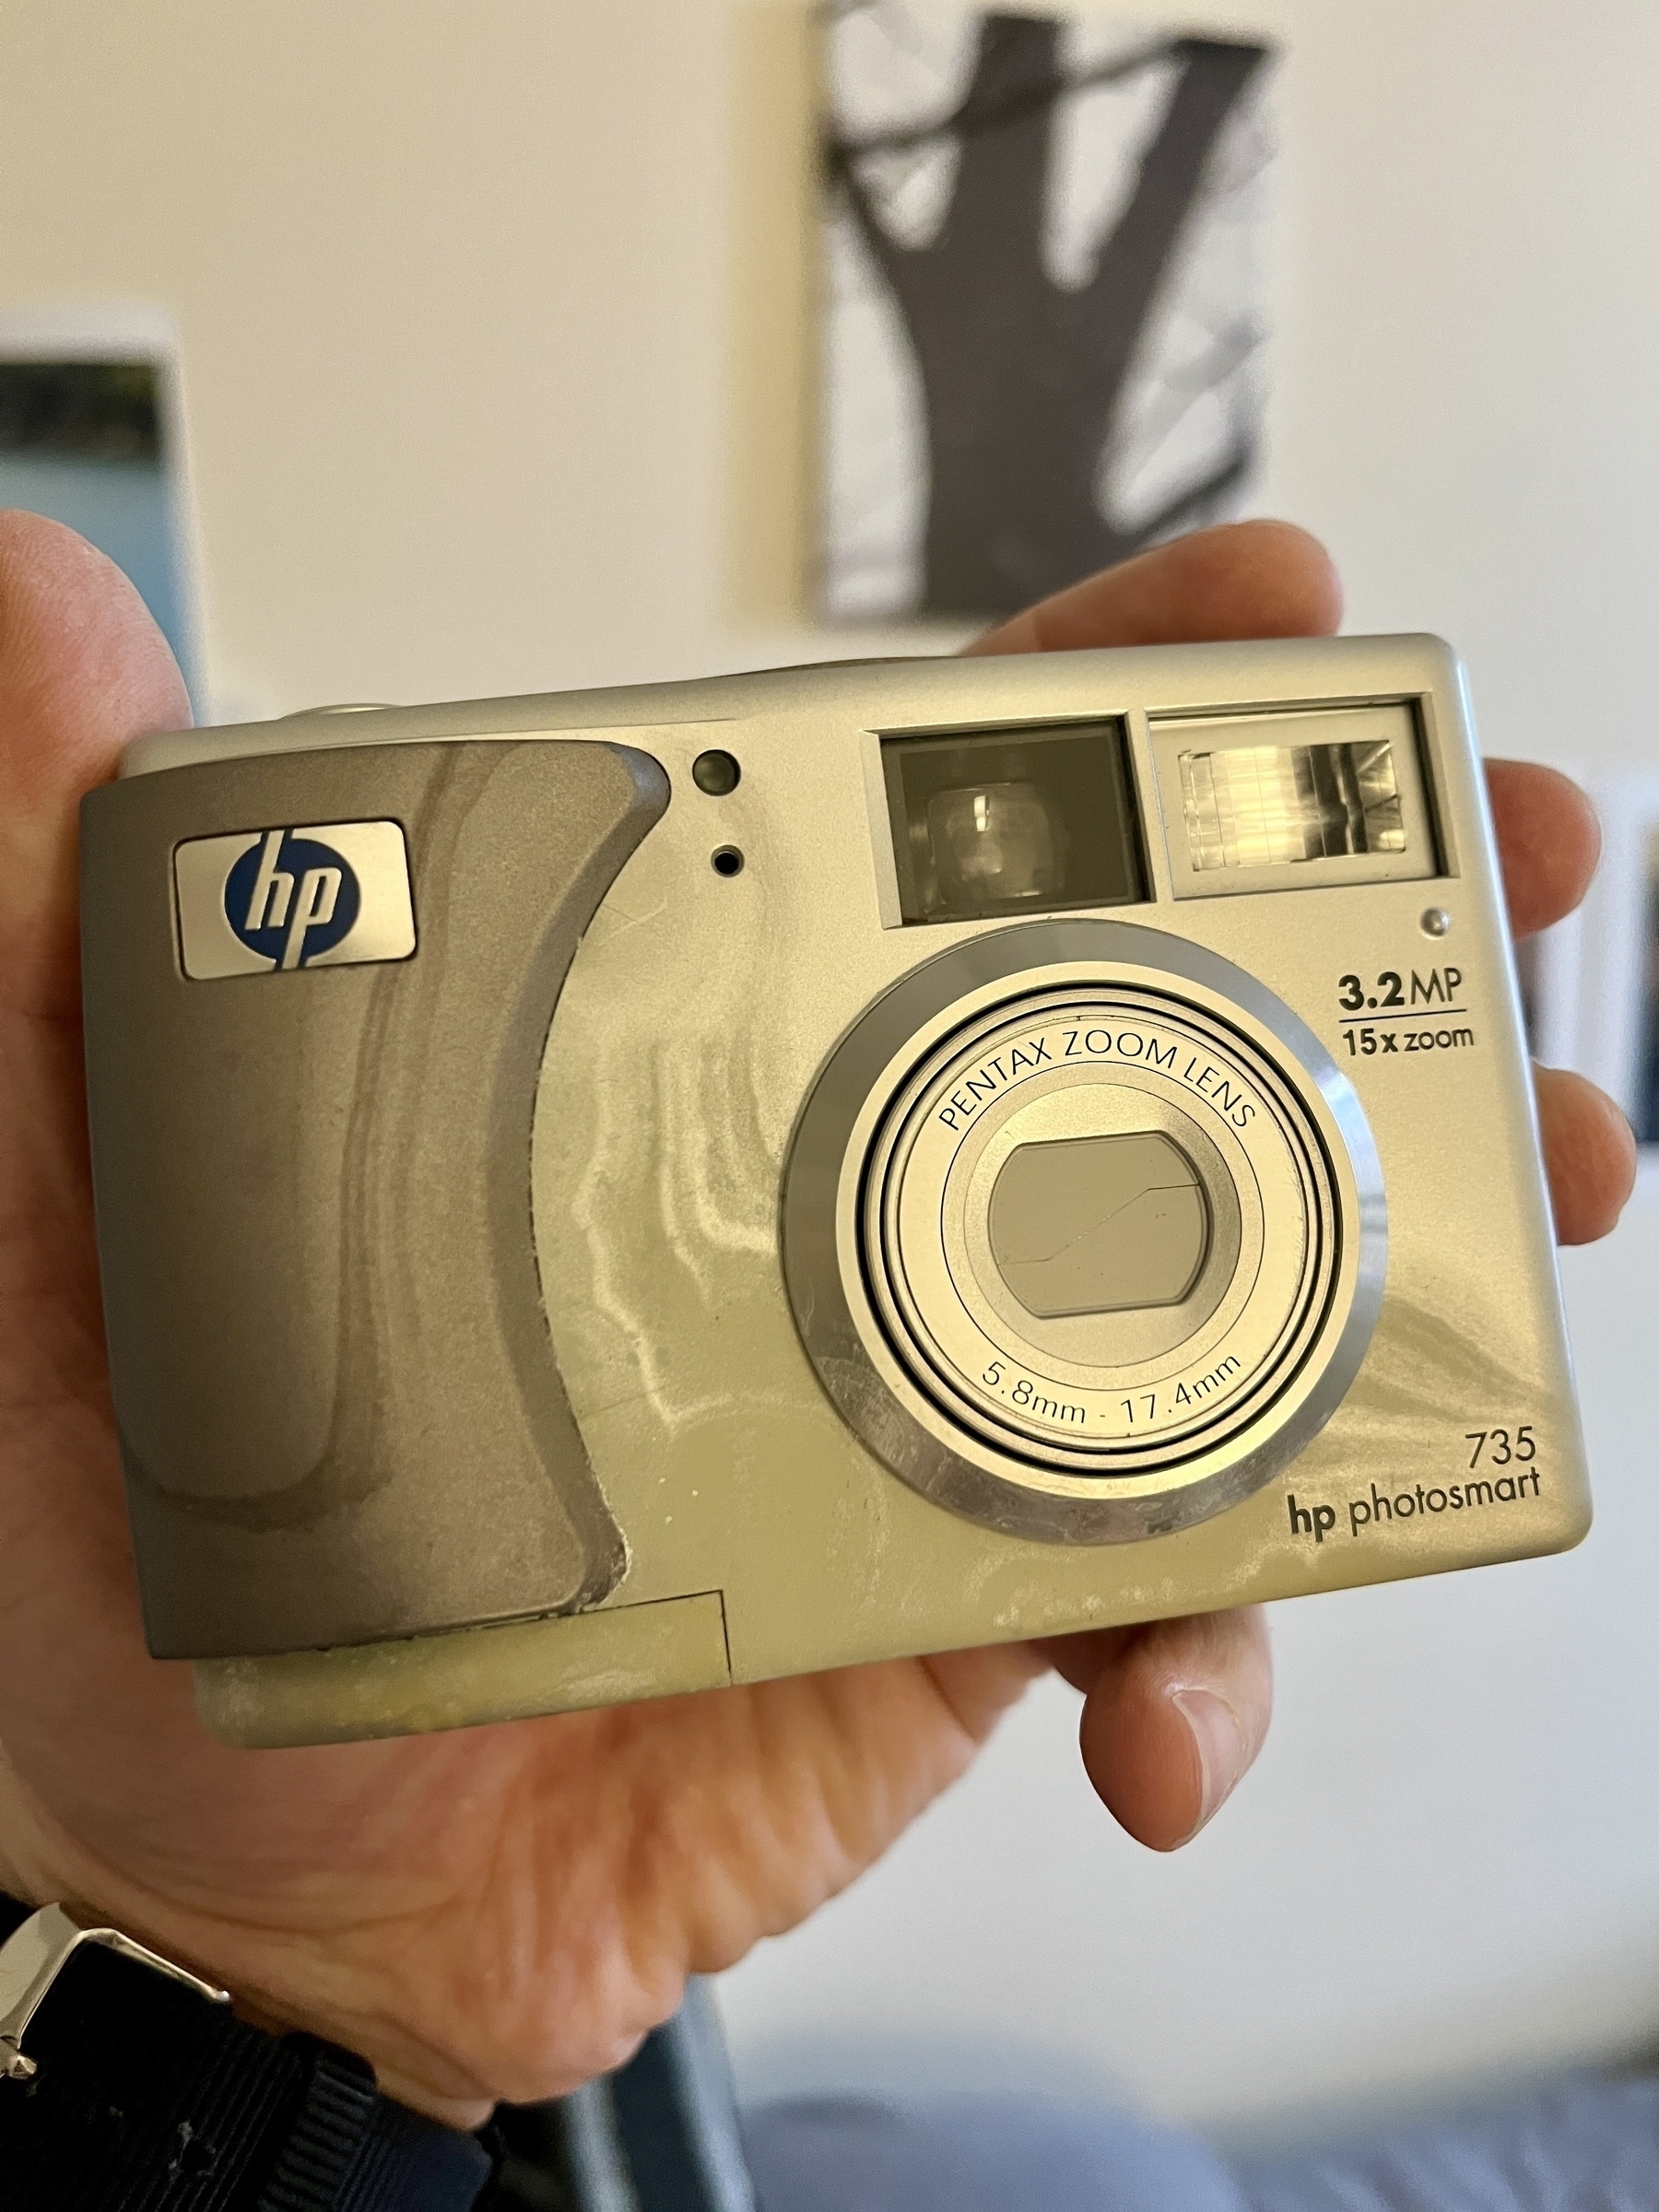 A hand holding an HP camera. It’s a photosmart 753 model. 